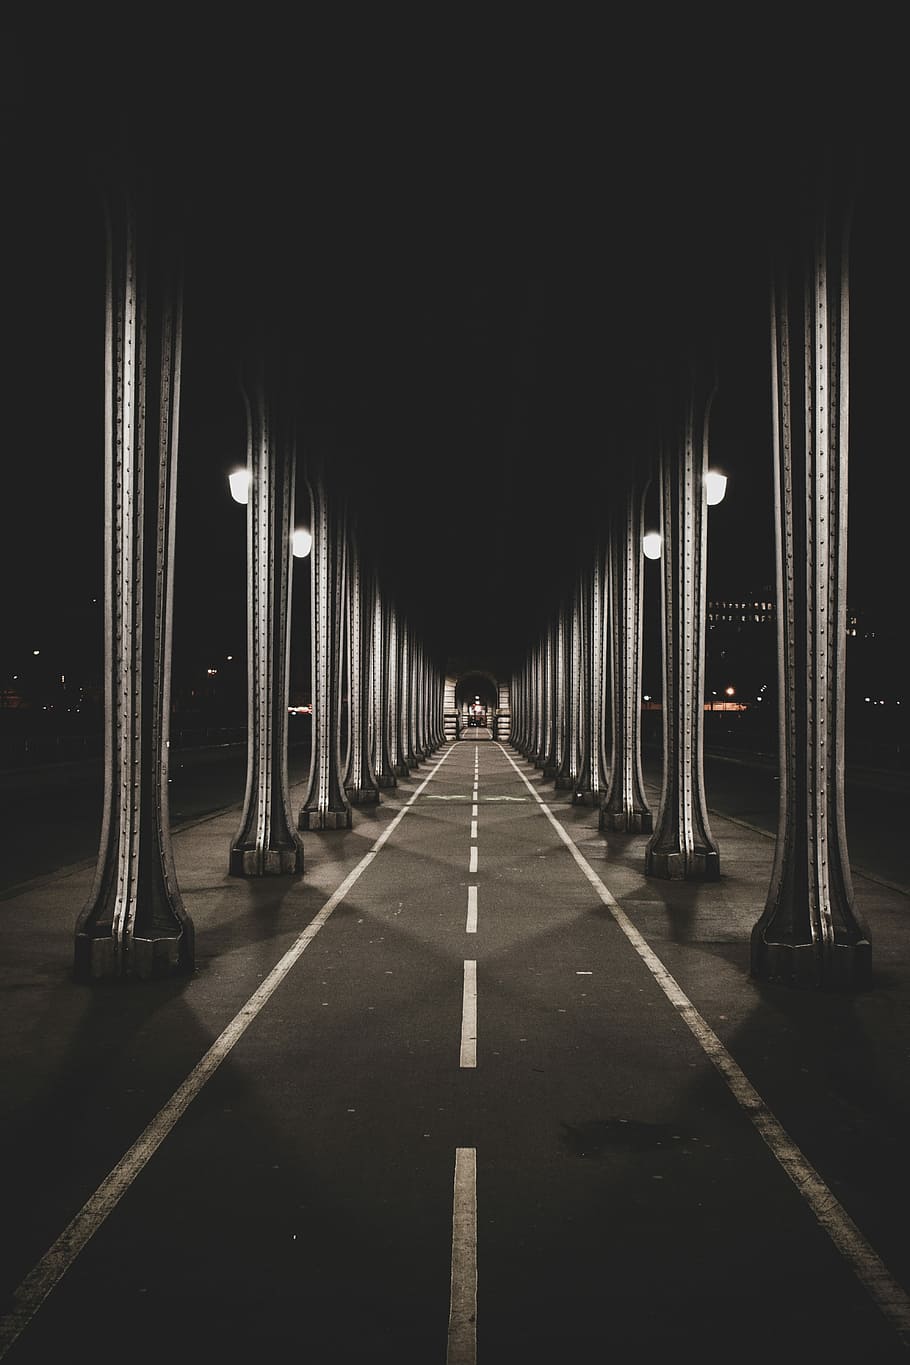 road under gray bridge, empty asphalt roadway during nighttime